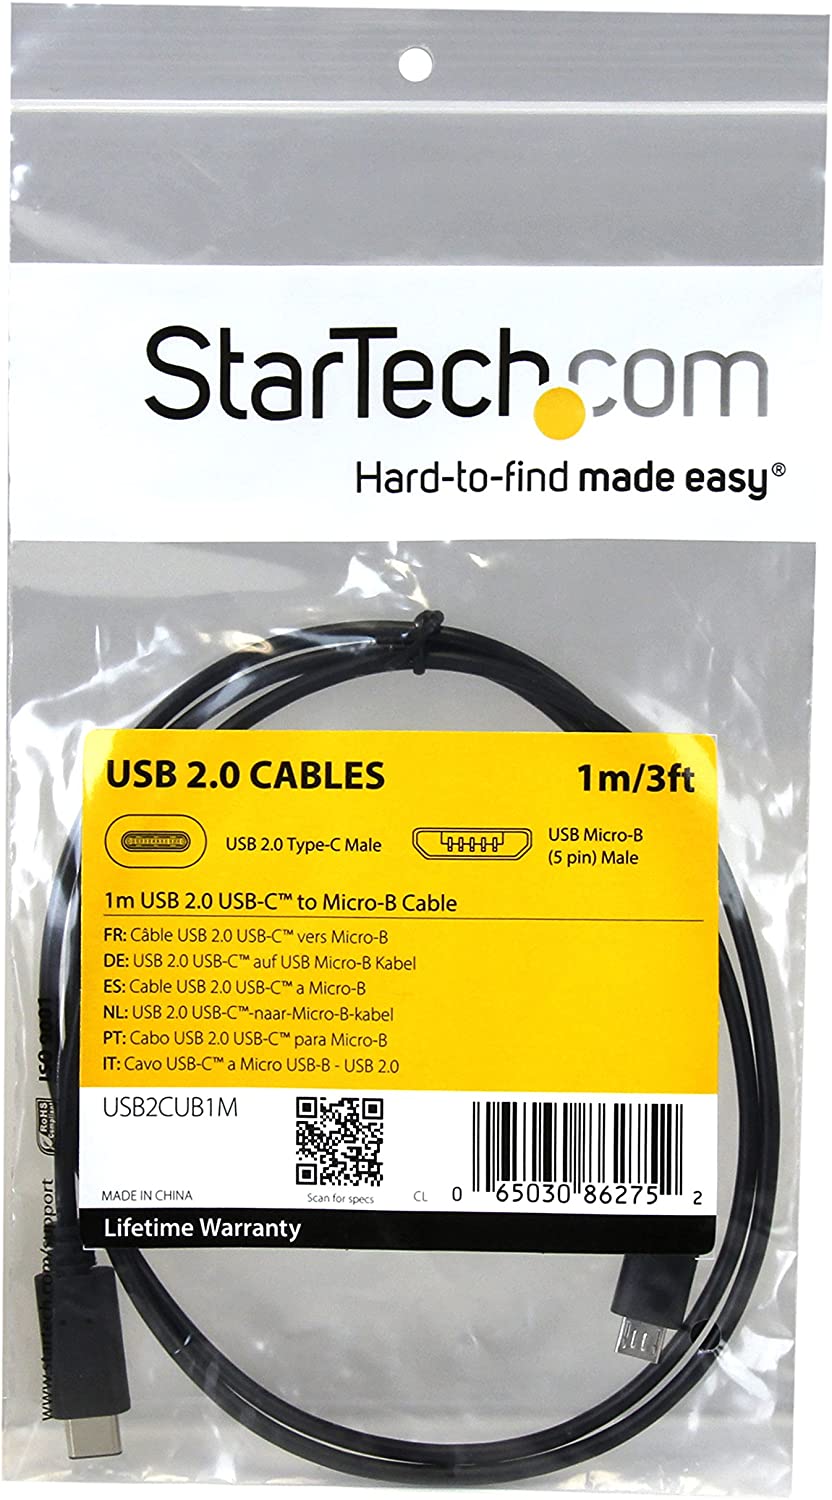 StarTech.com USB C to Micro USB Cable - 3 ft / 1m - USB 2.0 Cable - Micro USB Cord - Micro B USB C Cable - USB 2.0 Type C (USB2CUB1M),Black 3 ft/ 1 m